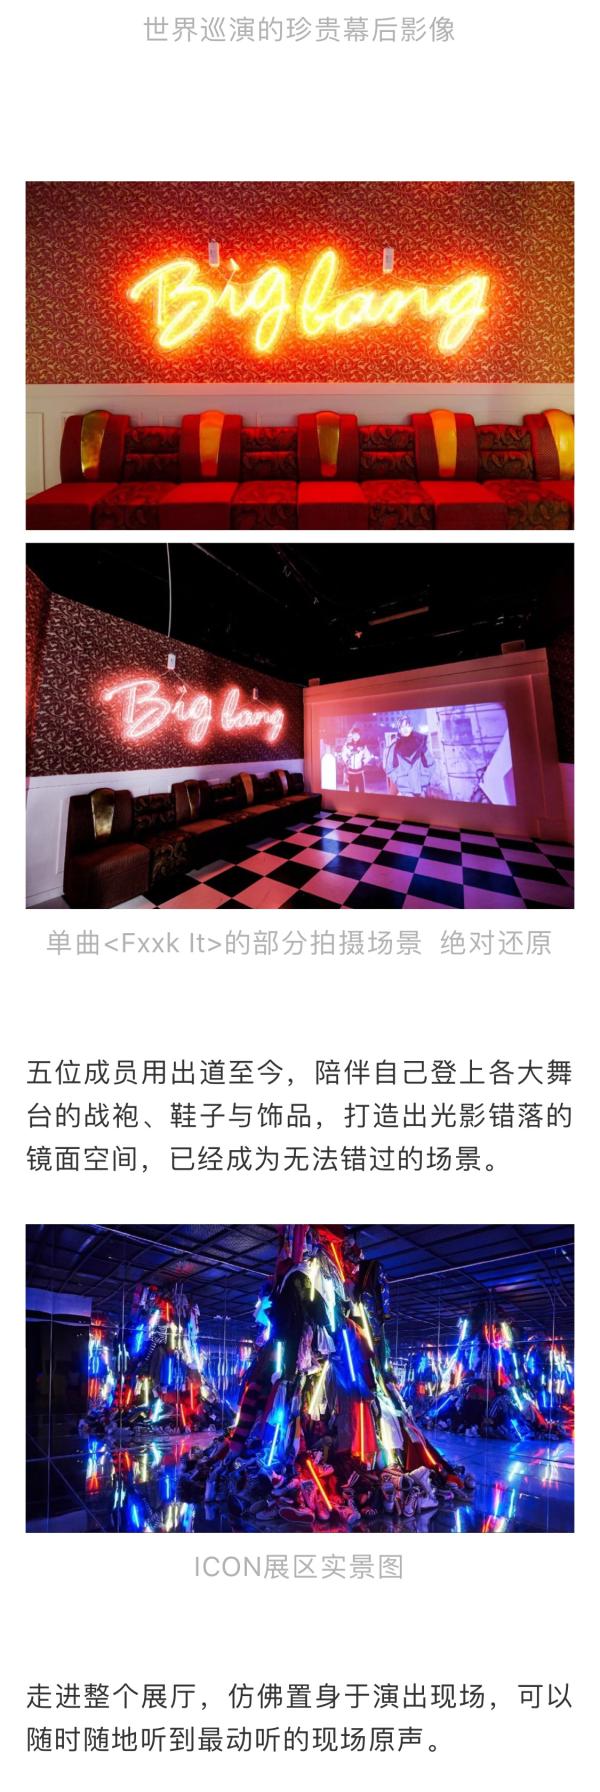 BIGBANG10 THE EXHIBITION: A TO Z 十周年回顾大展上海站